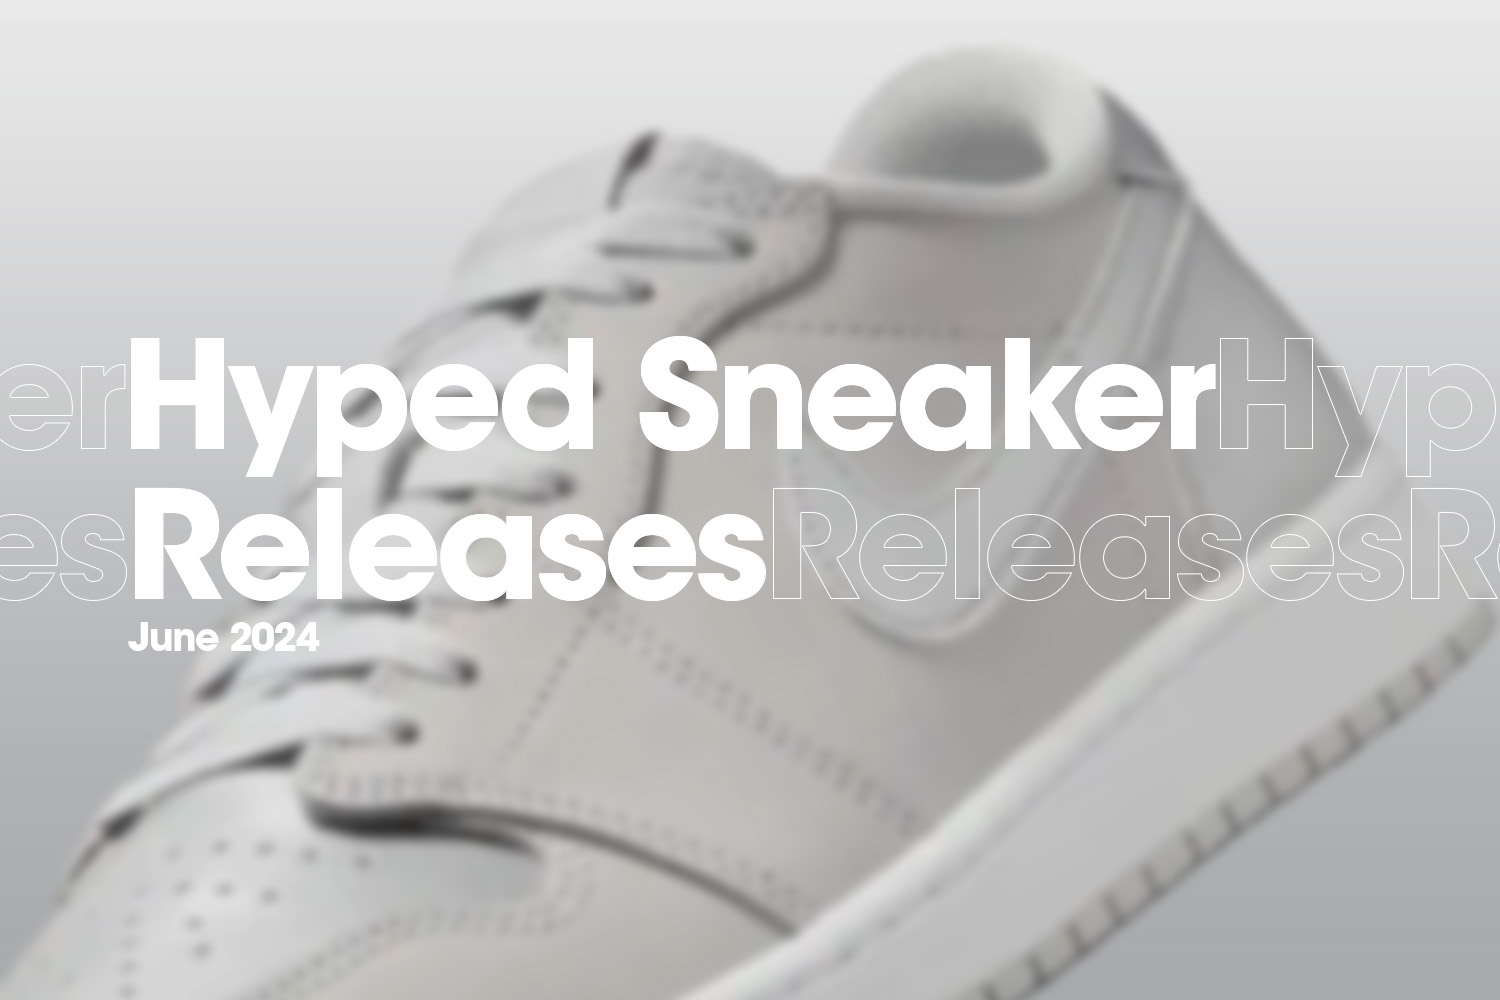 Hyped Sneaker Releases of June 2024